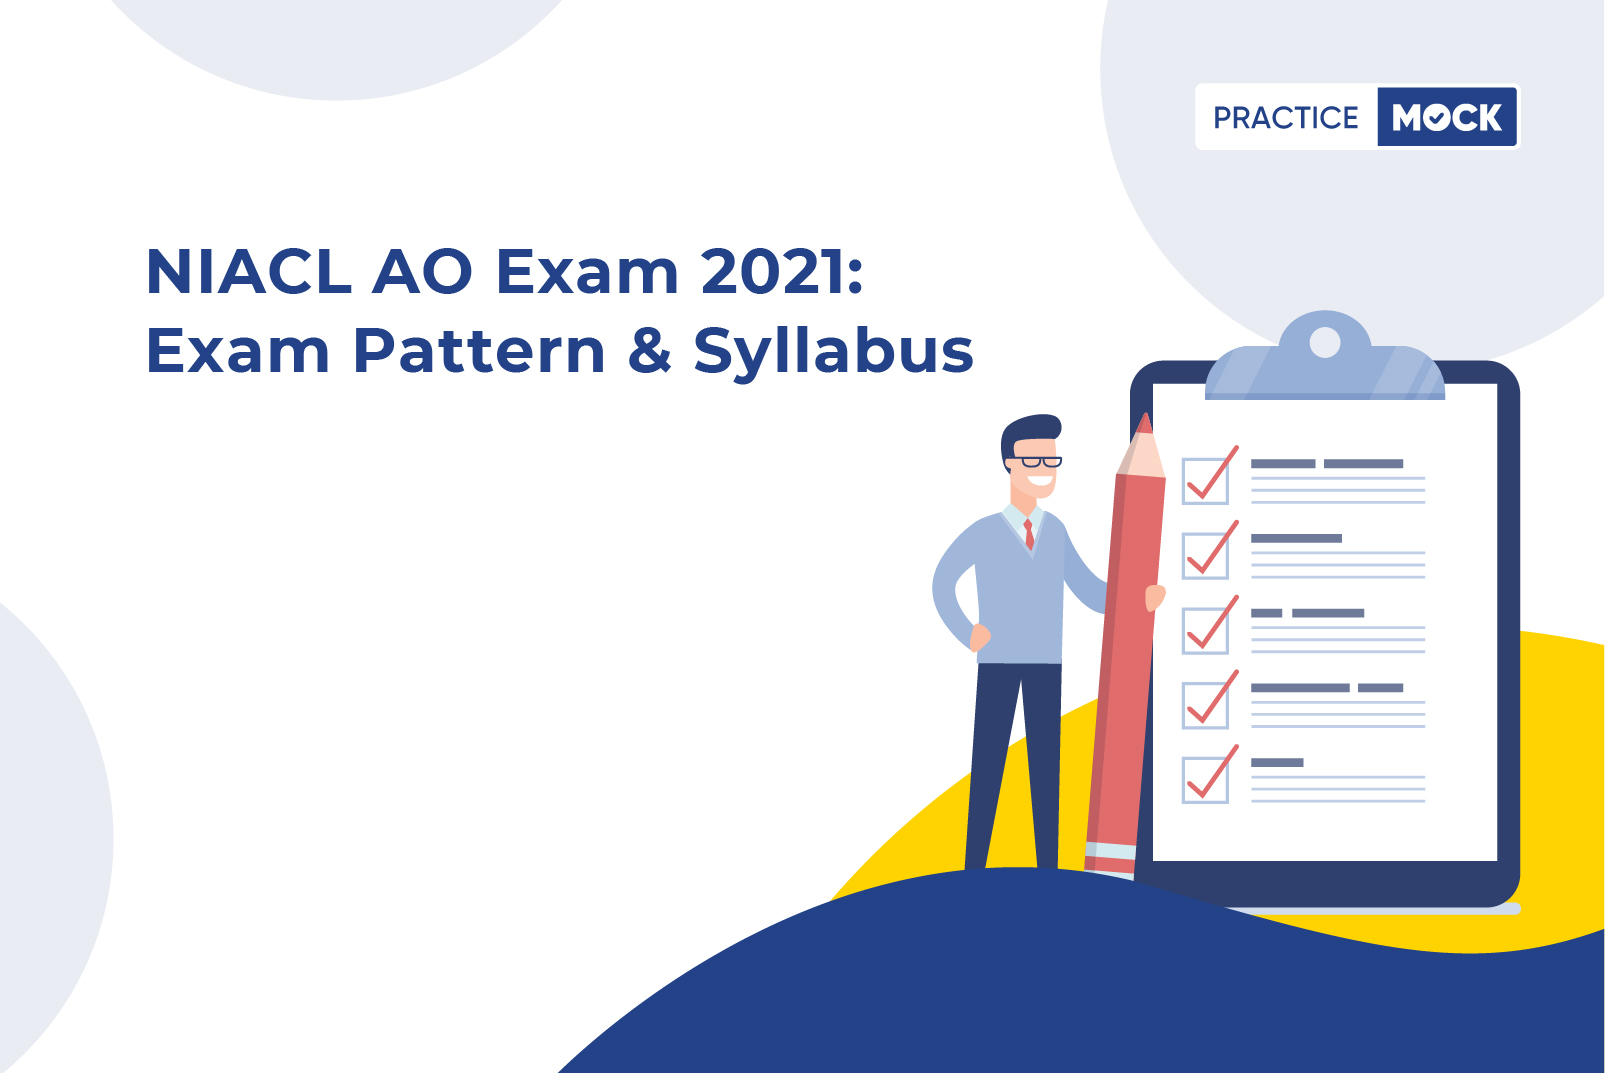 NIACL AO Exam 2021 Exam Pattern and Syllabus